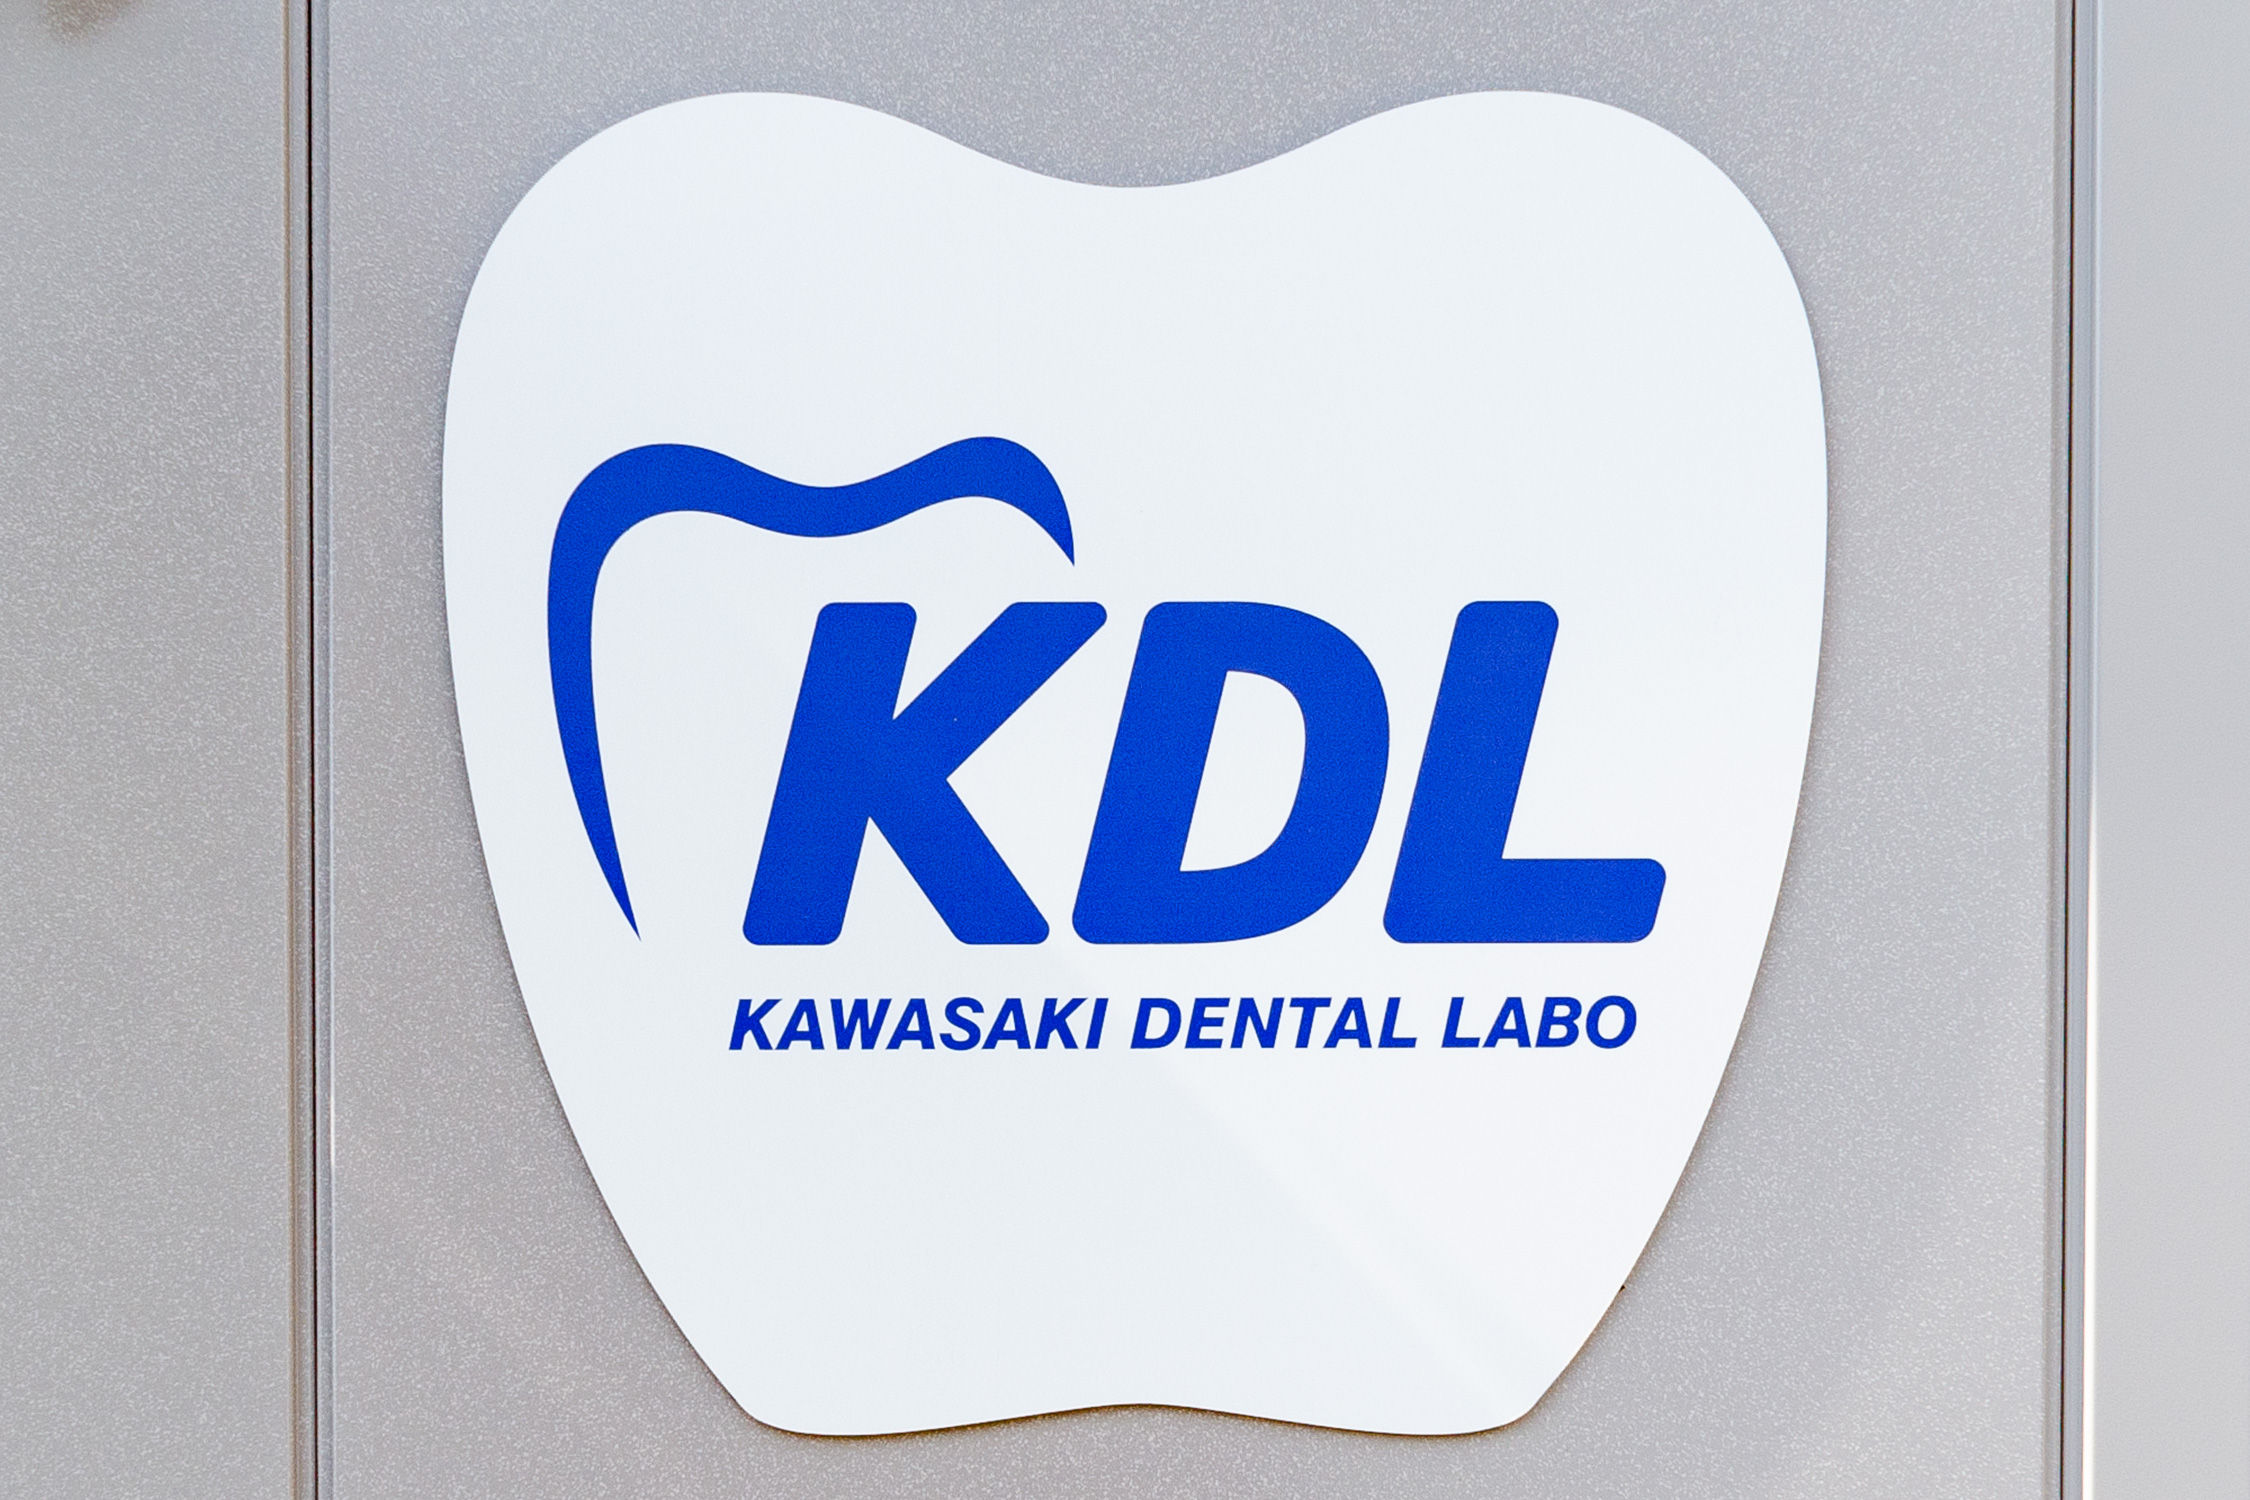 vi_kawasaki-dental-labo_2